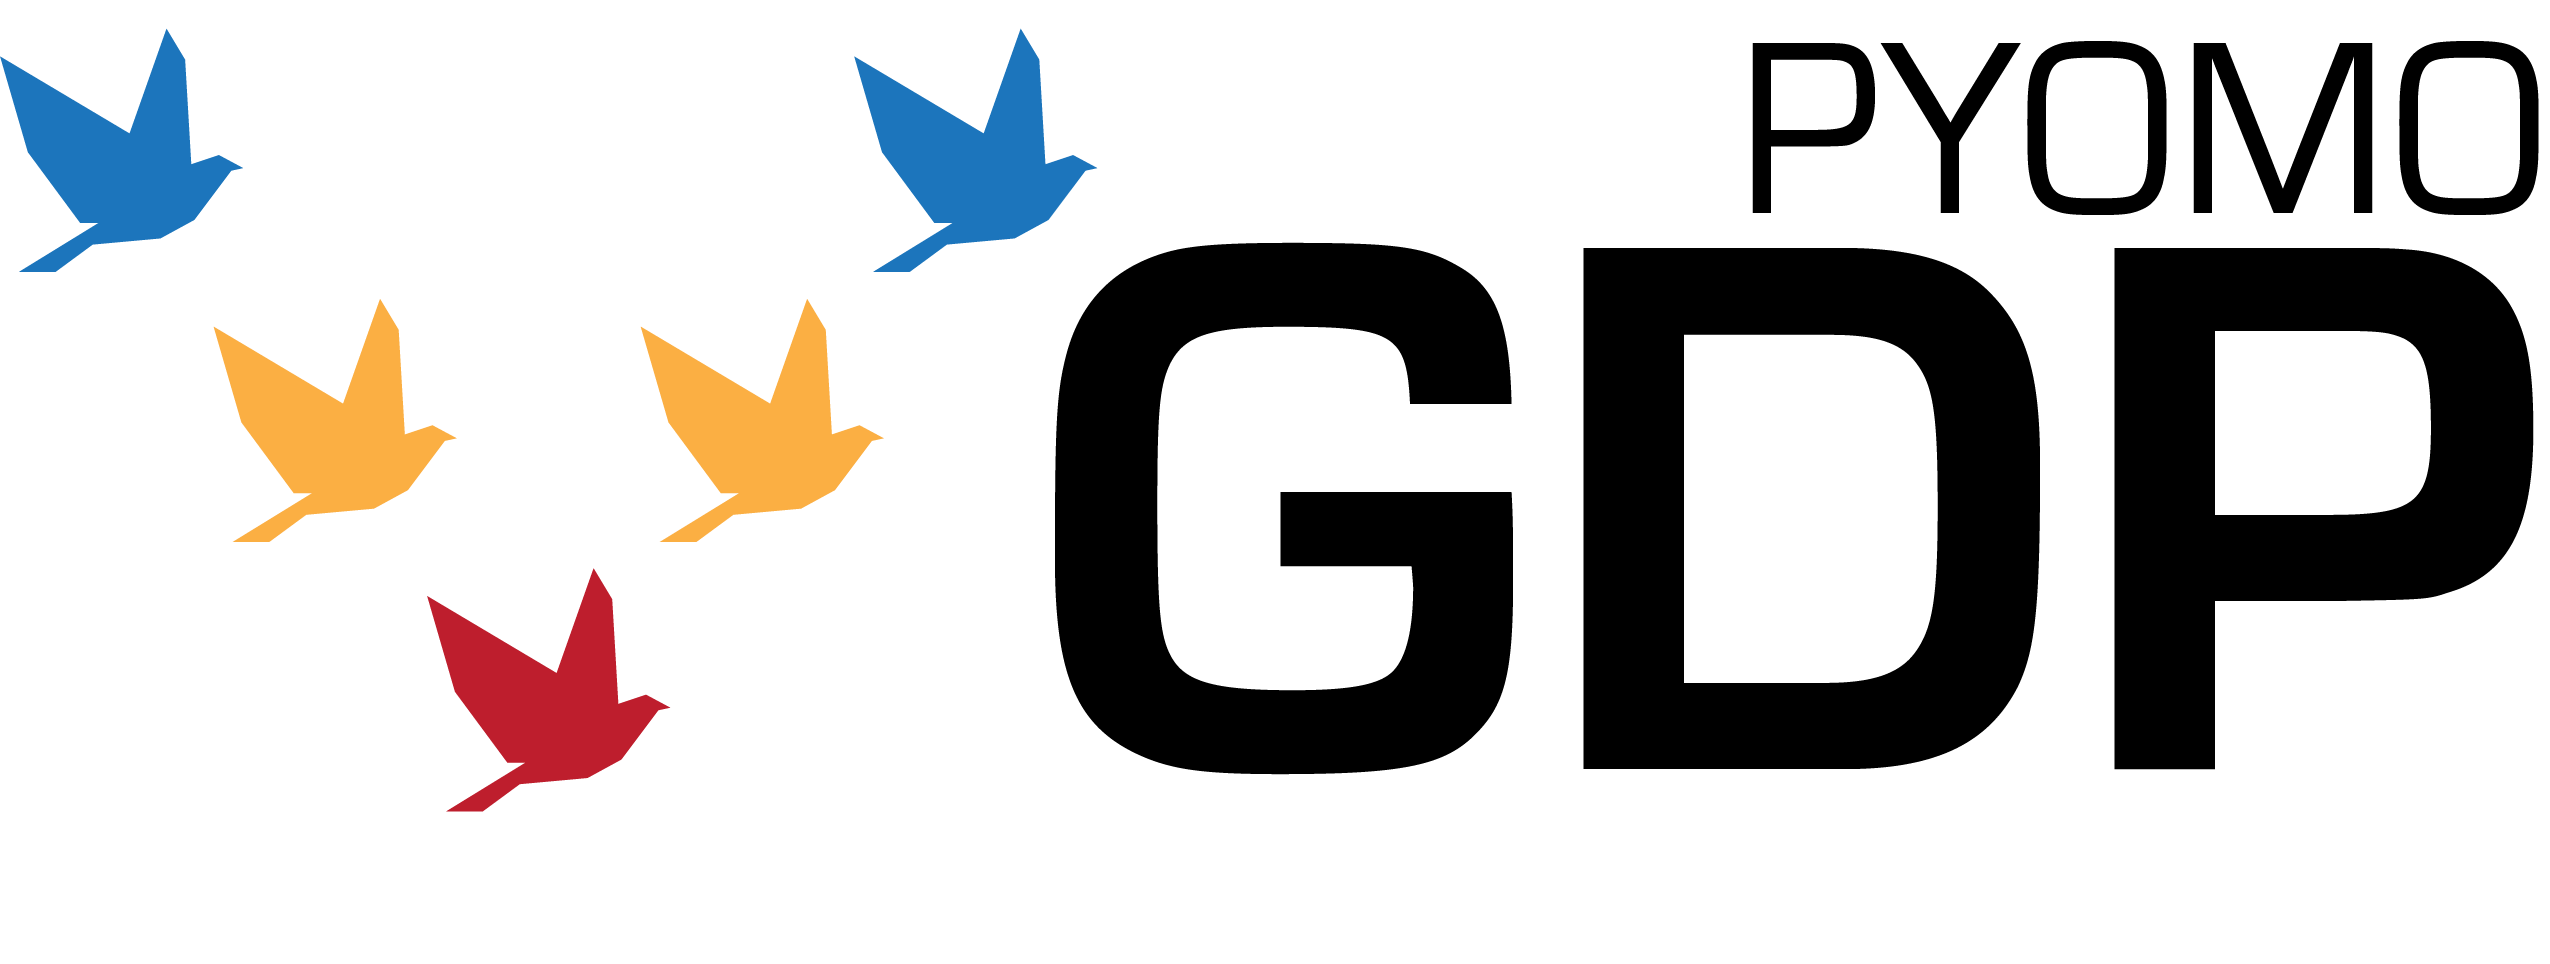 GDP Logo - Pyomo.GDP logo · Issue #816 · Pyomo/pyomo · GitHub